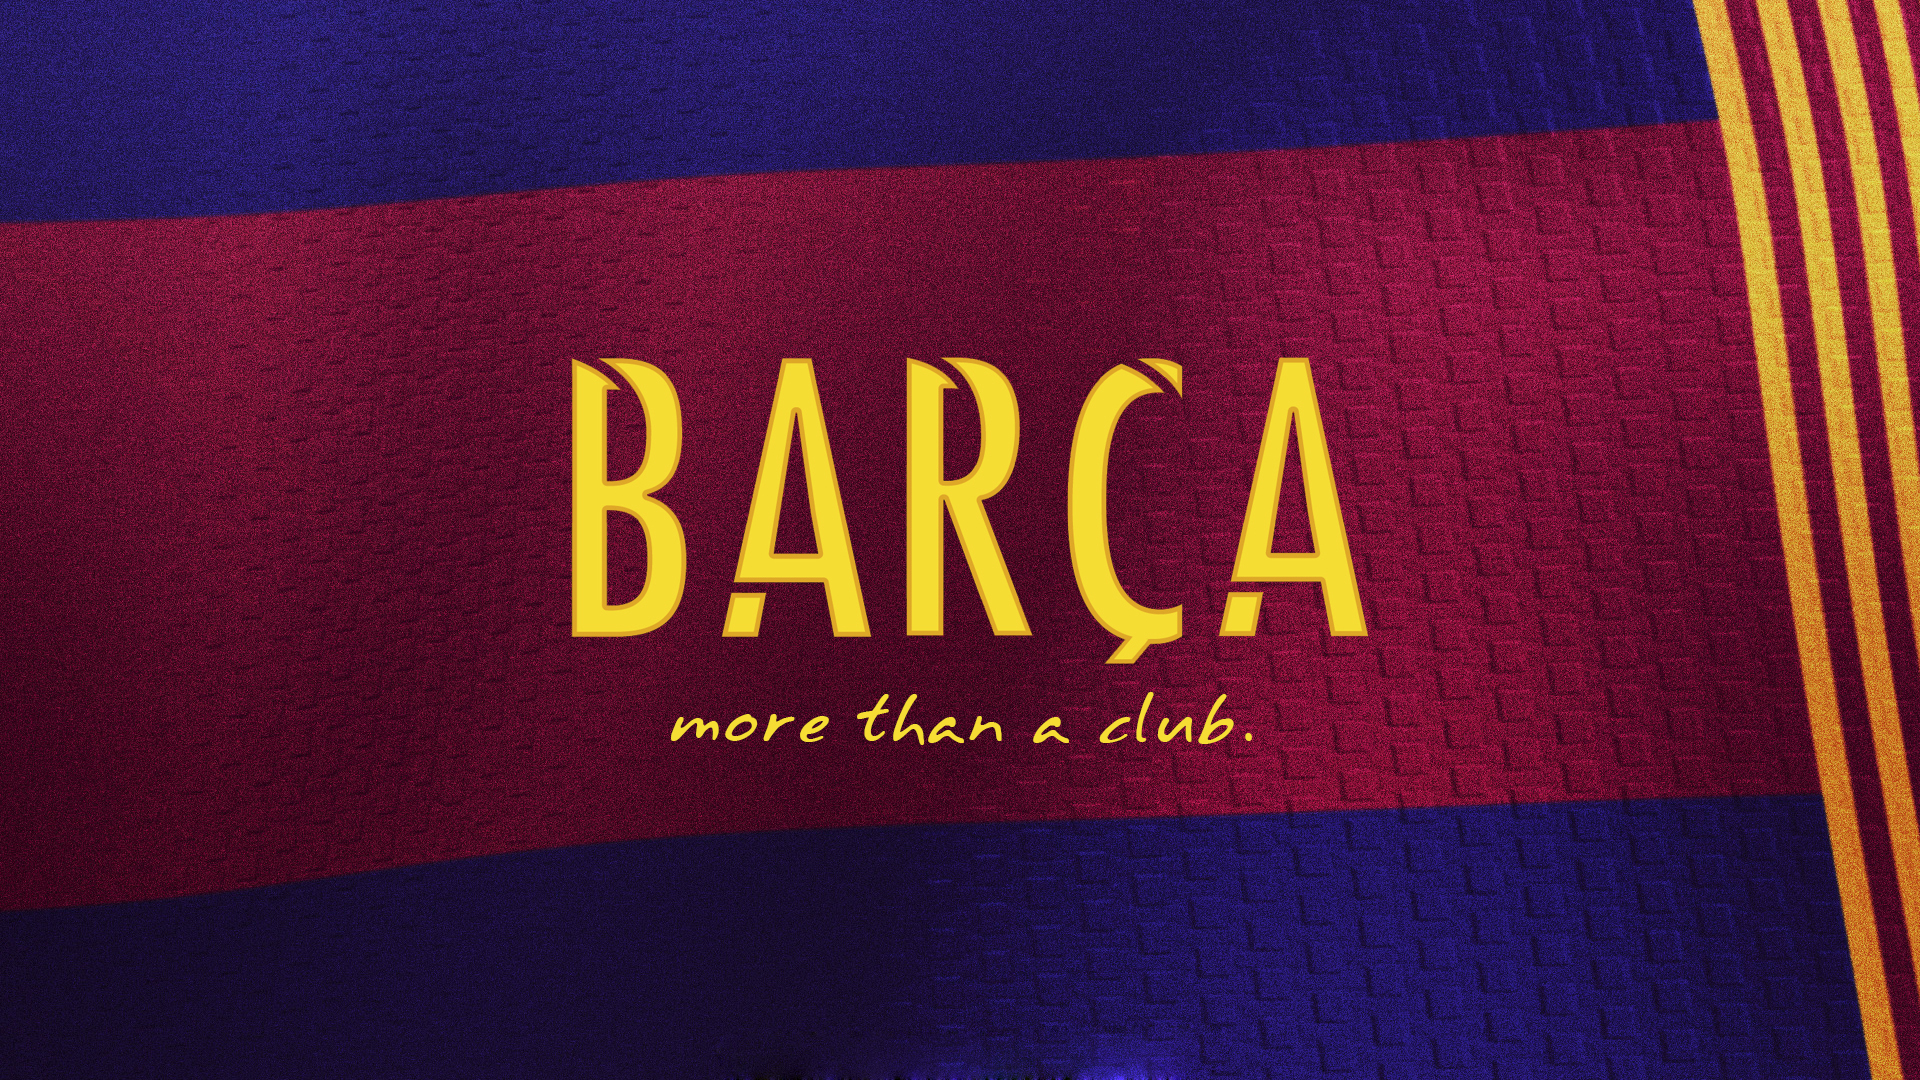 FC Barcelona Logo Wallpaper Download | PixelsTalk.Net